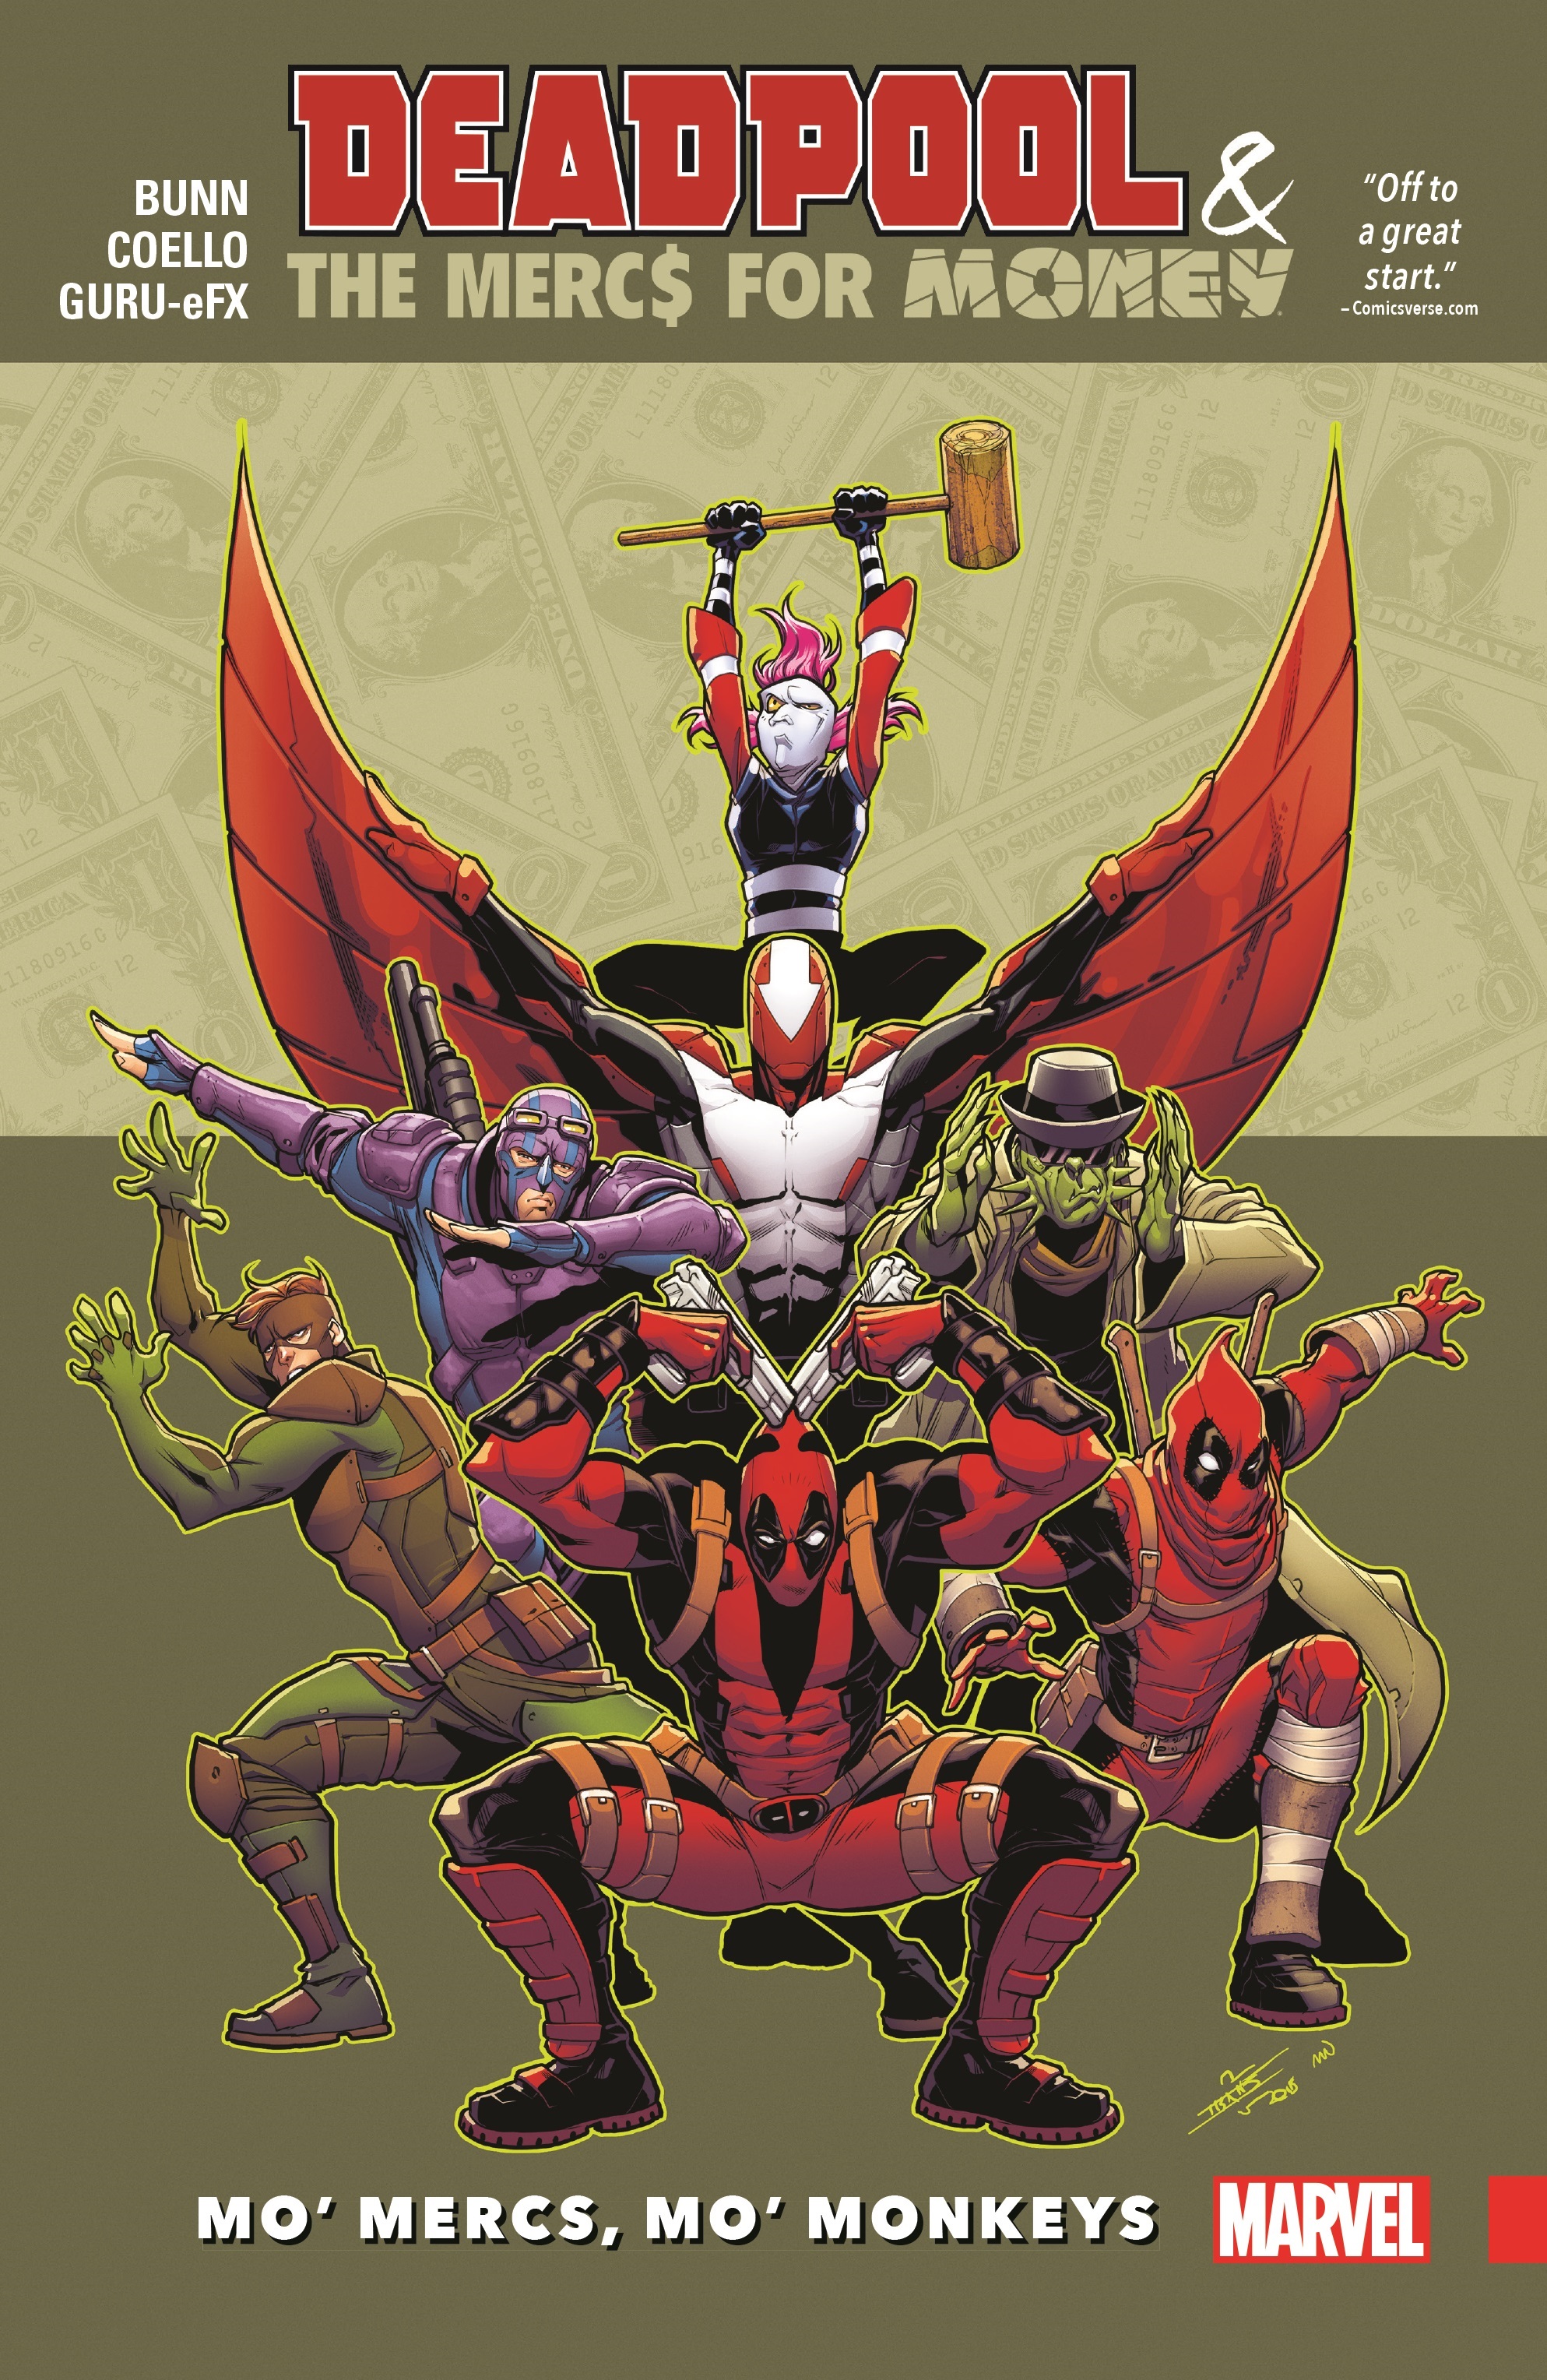 Deadpool & The Mercs for Money Vol. 1: Mo' Mercs, Mo' Monkeys (Trade Paperback)